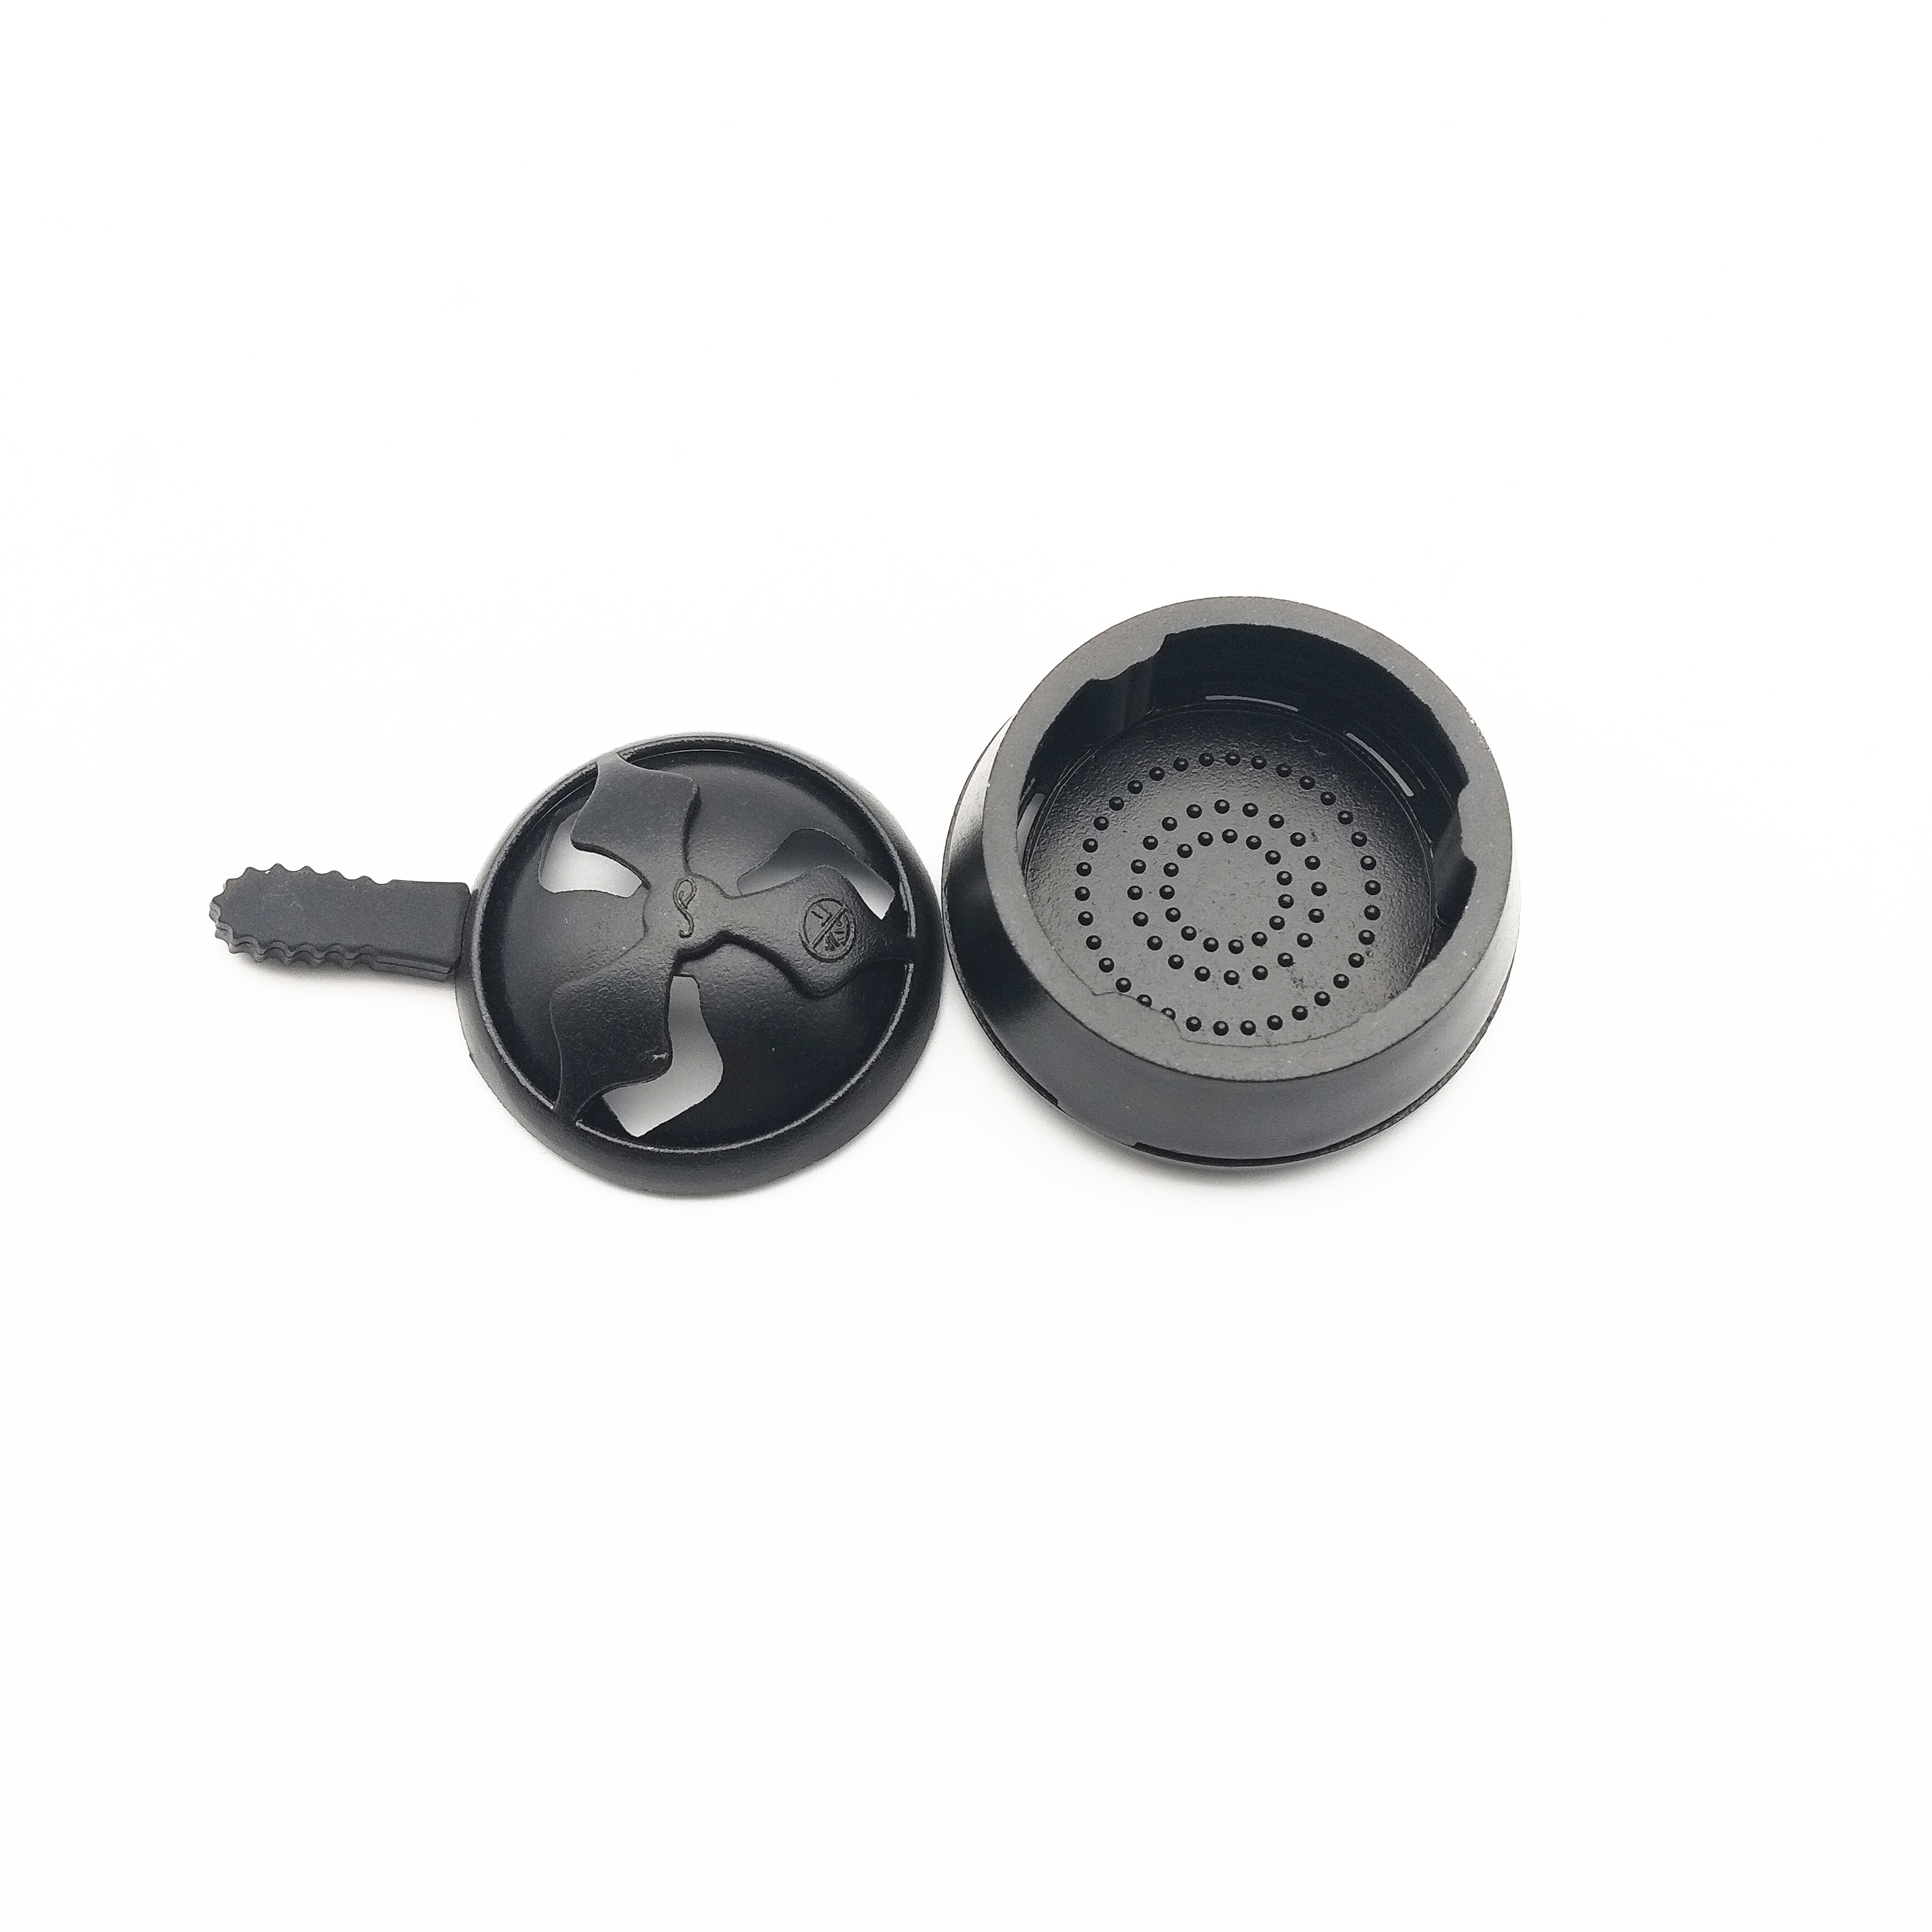 Aluminum Shisha Bowl Hookah Heat Management Device - Perfect for Tastier Hookah Flavor And Longer Lasting Smoke Sessions